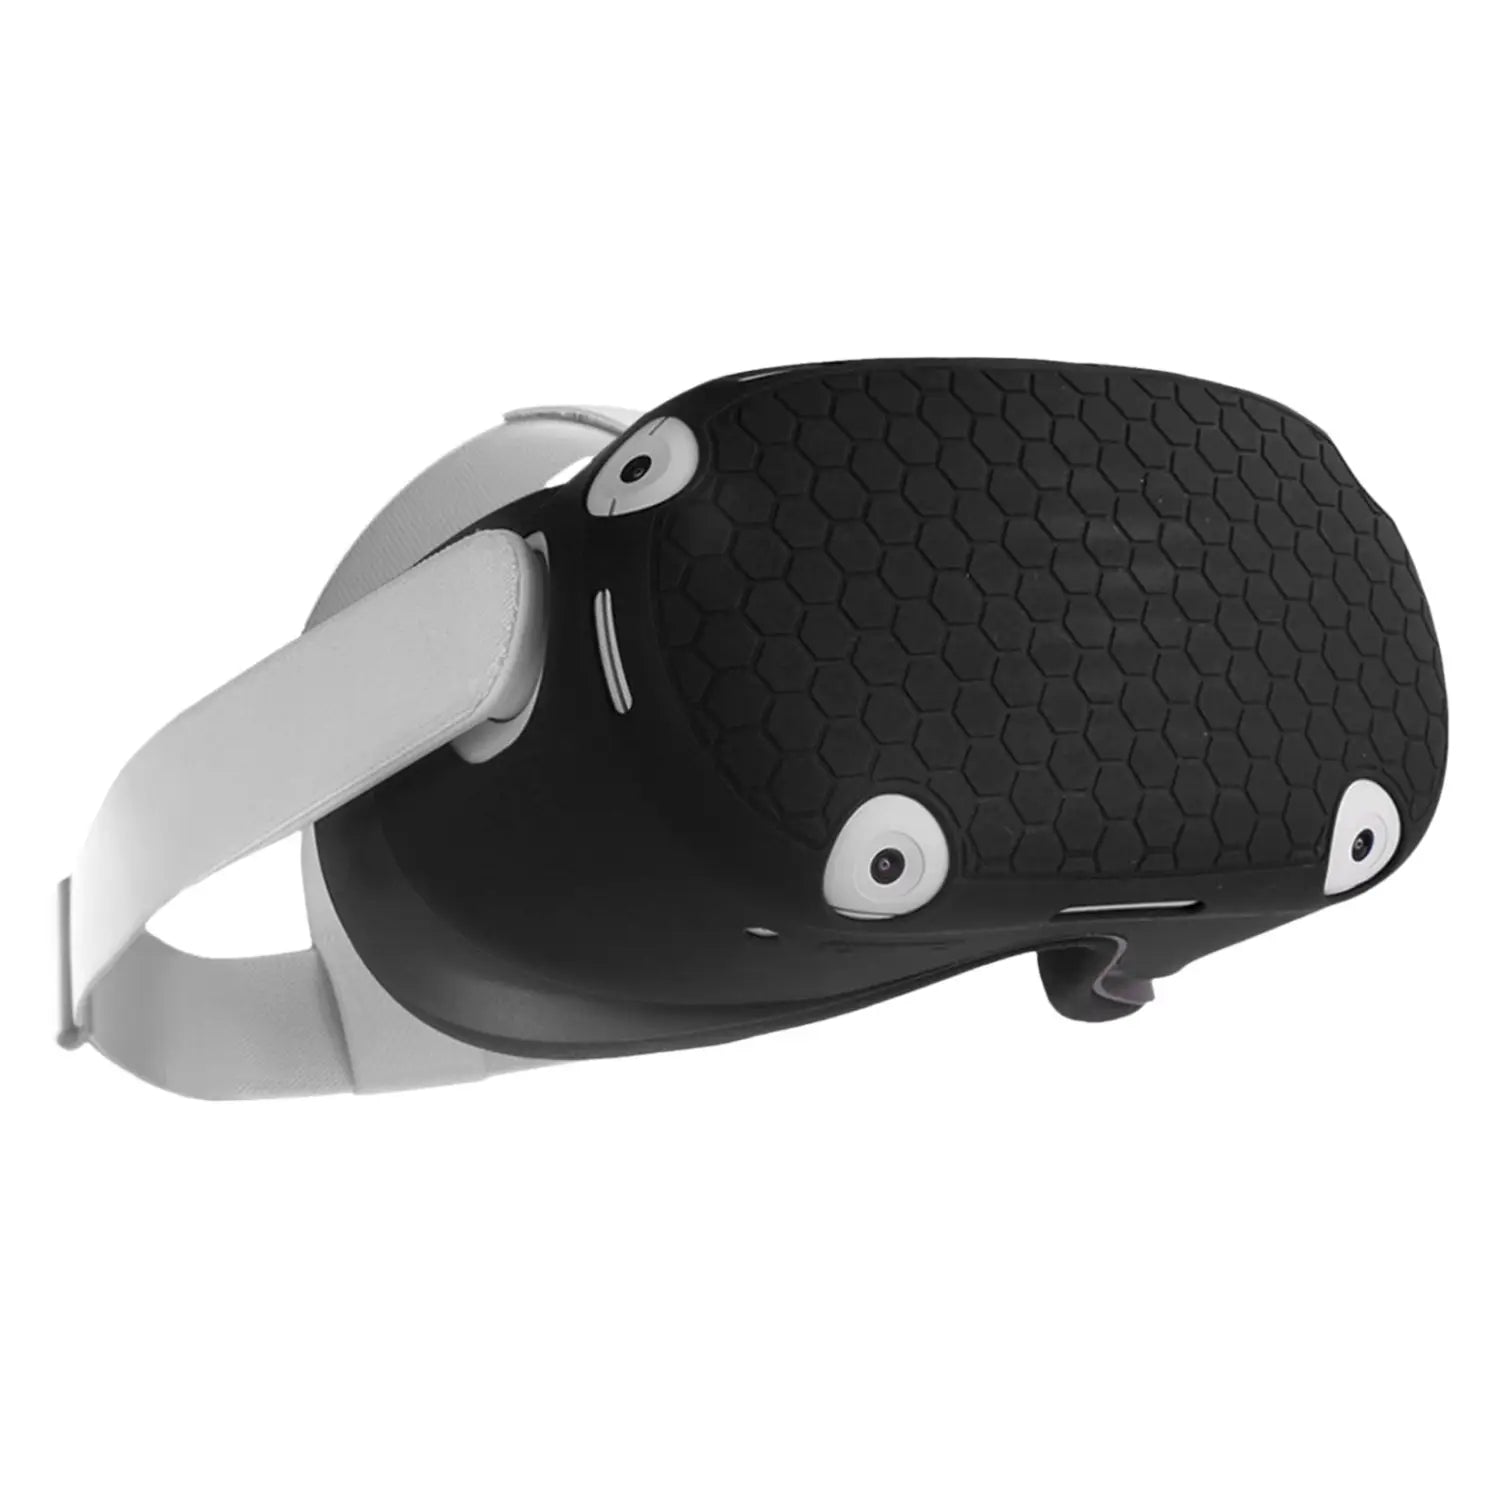 Coque protection Silicone pour casque Oculus Quest 2